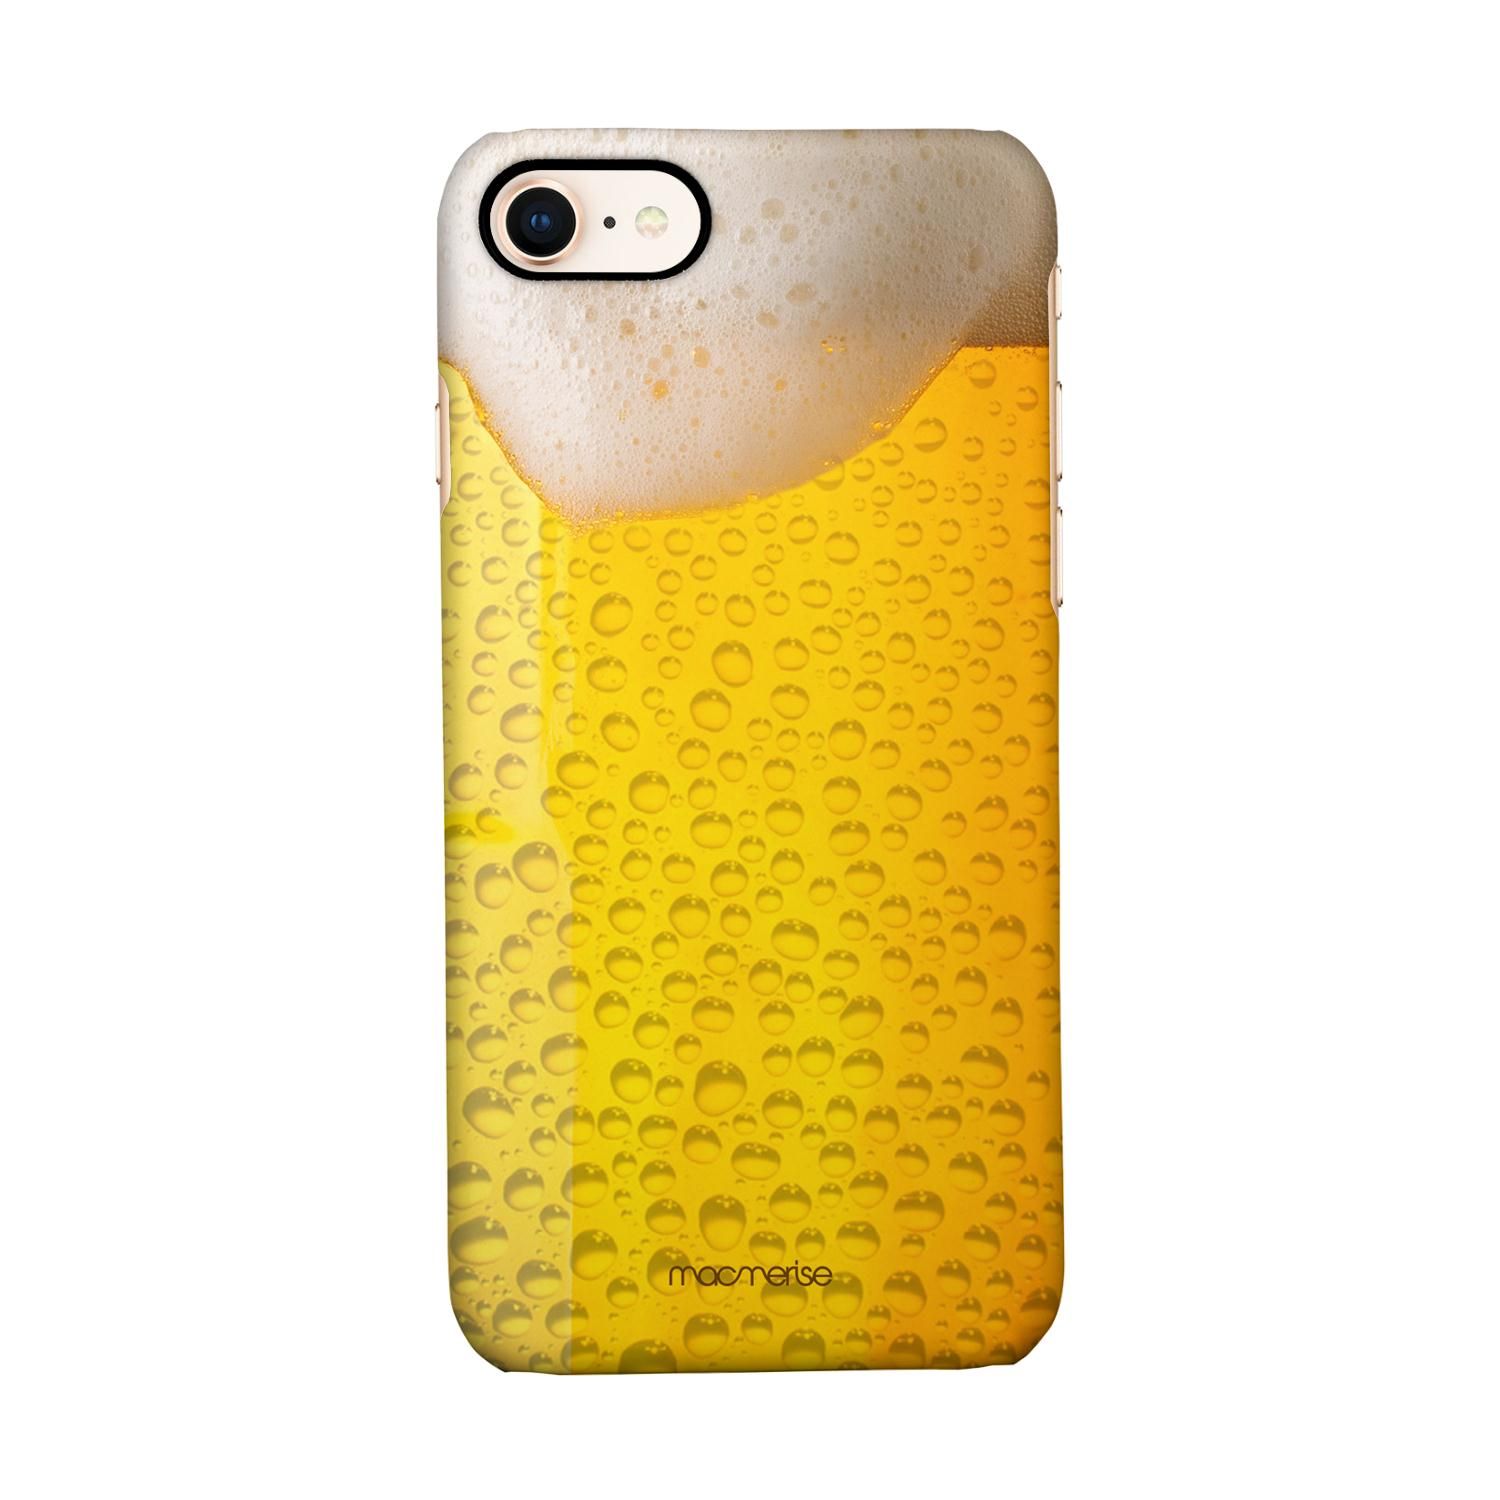 Buy Chug It - Sleek Phone Case for iPhone 7 Online